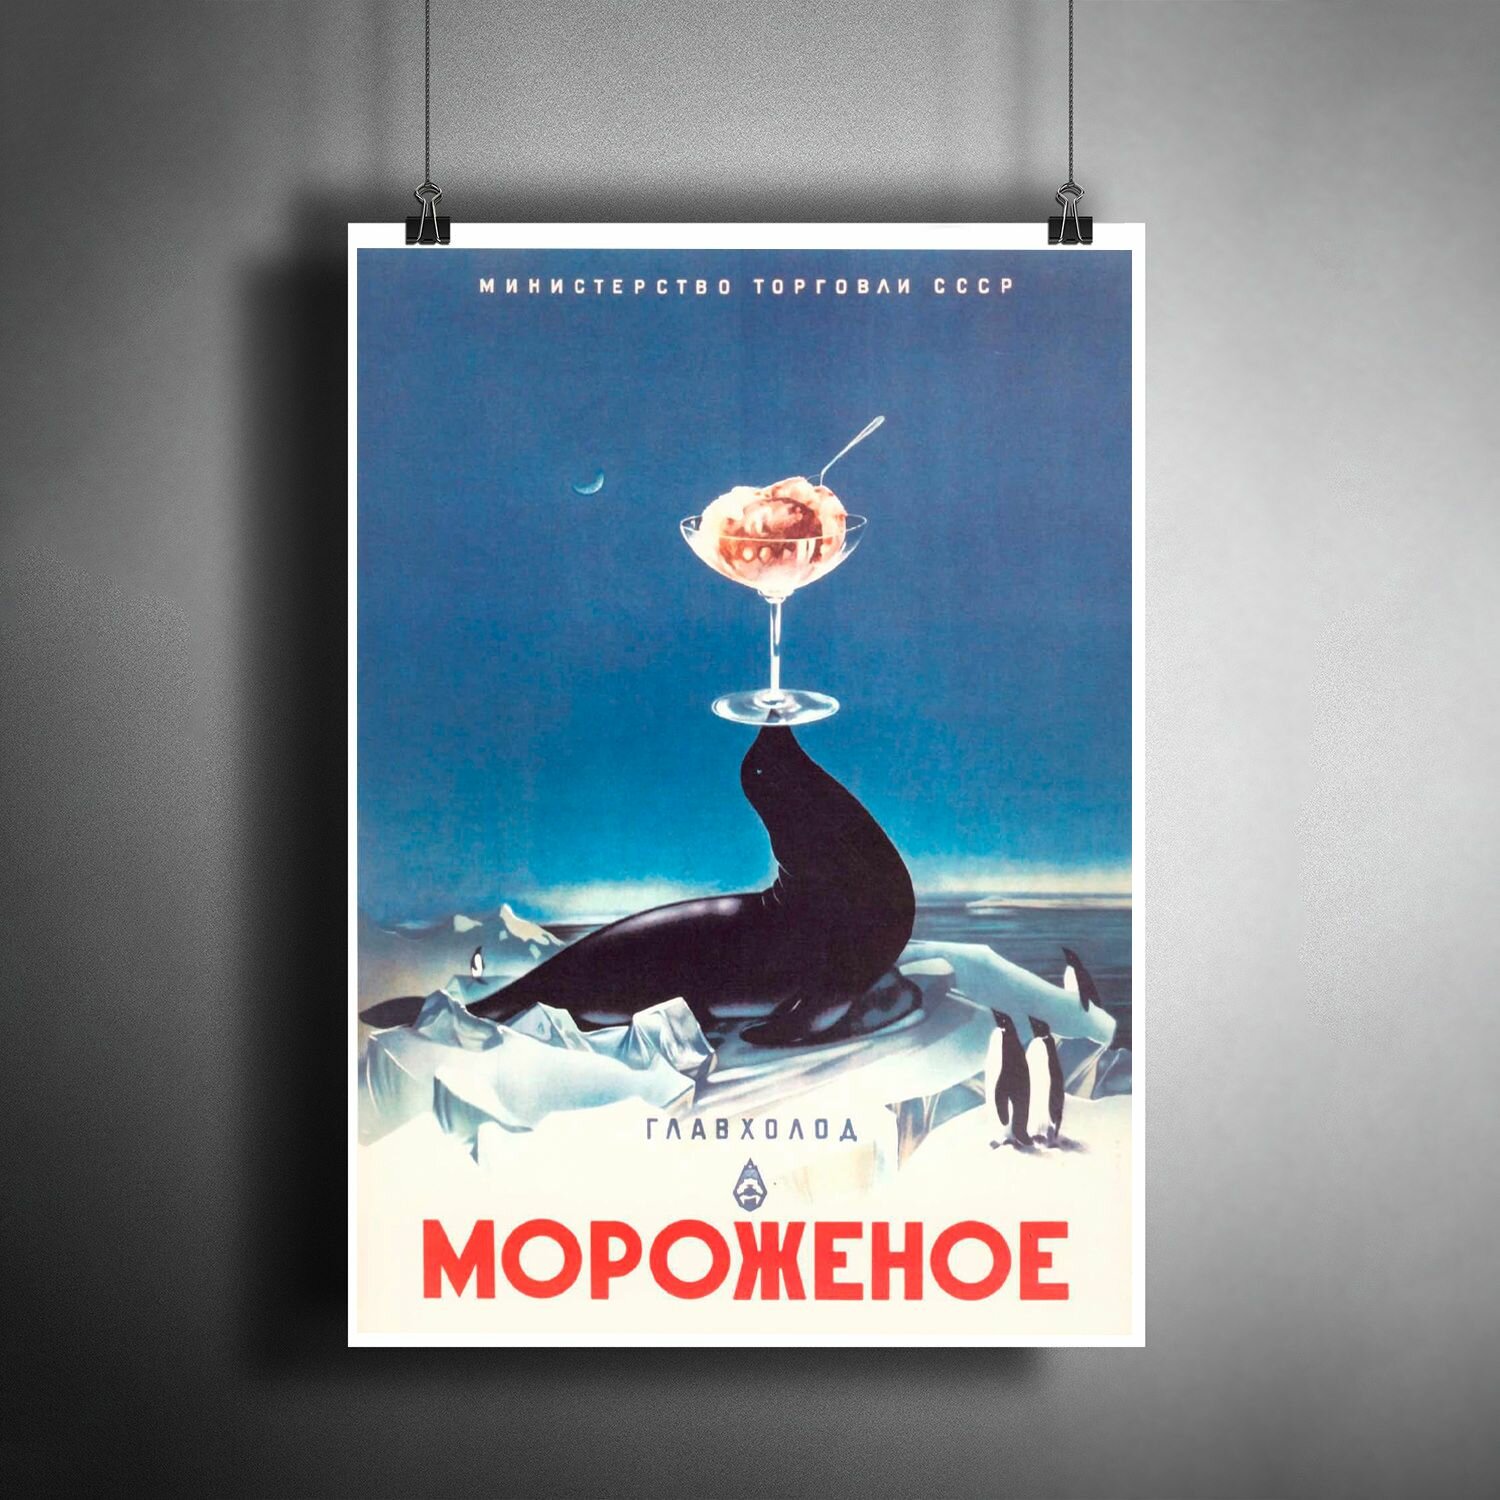 Постер плакат для интерьера "Плакат Советский "Мороженое" / Декор дома, офиса, комнаты, квартиры, детской A3 (297 x 420 мм)